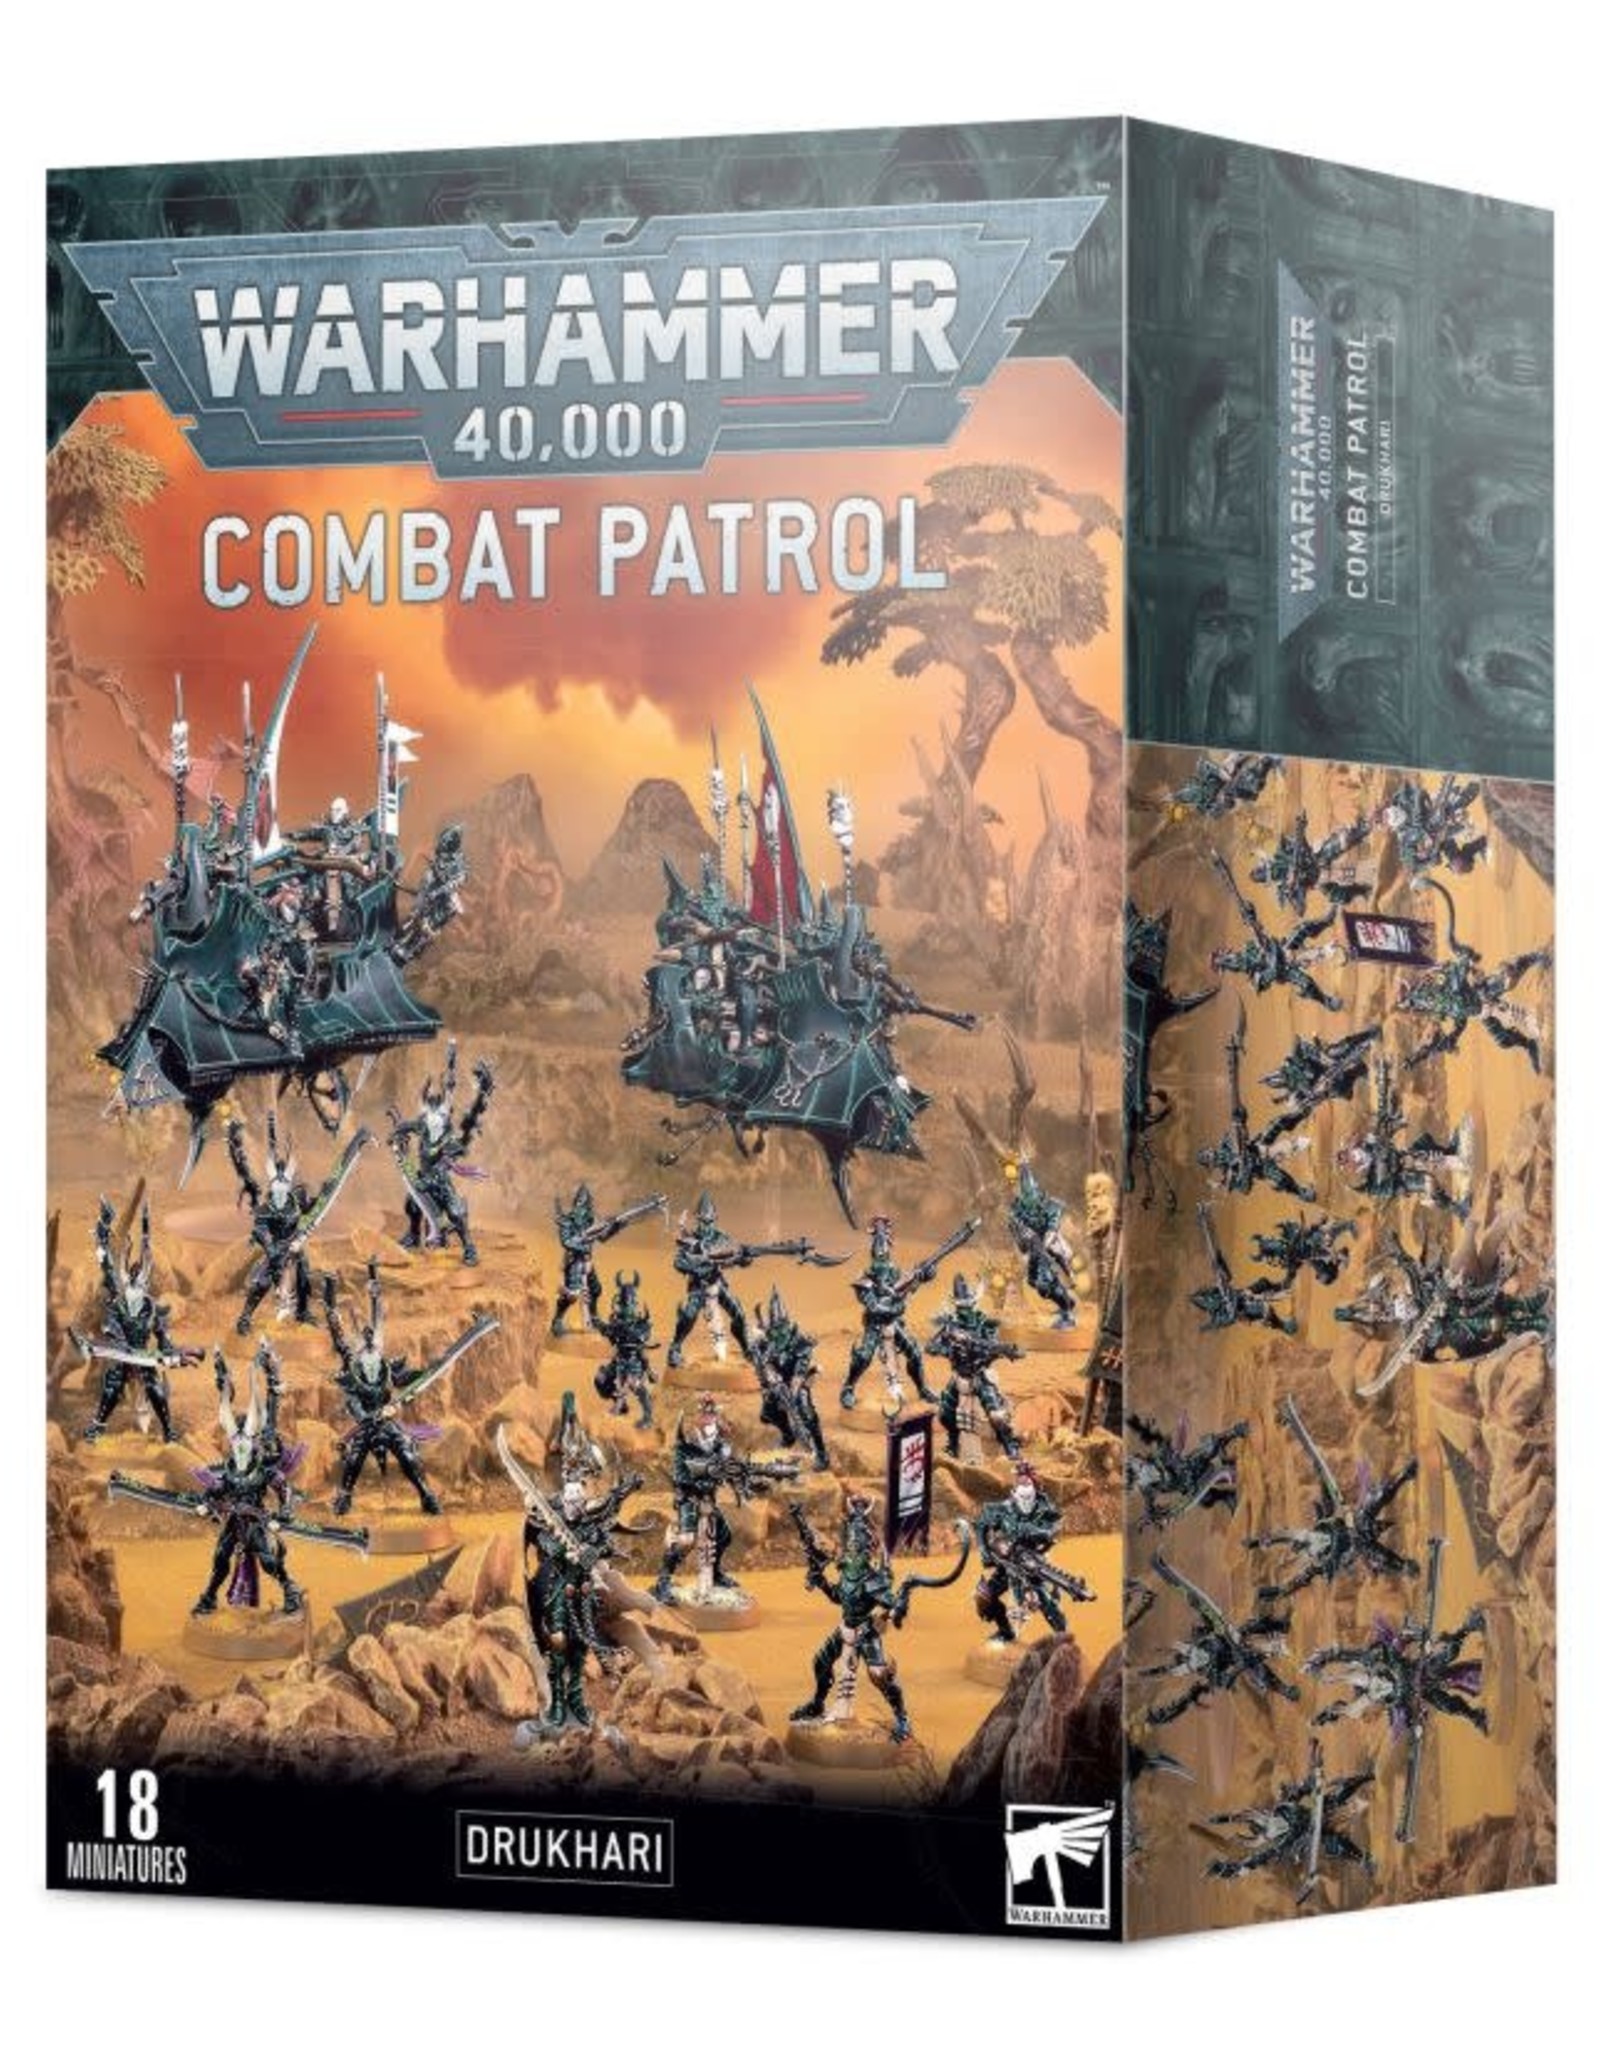 Warhammer 40k Combat Patrol: Drukhari